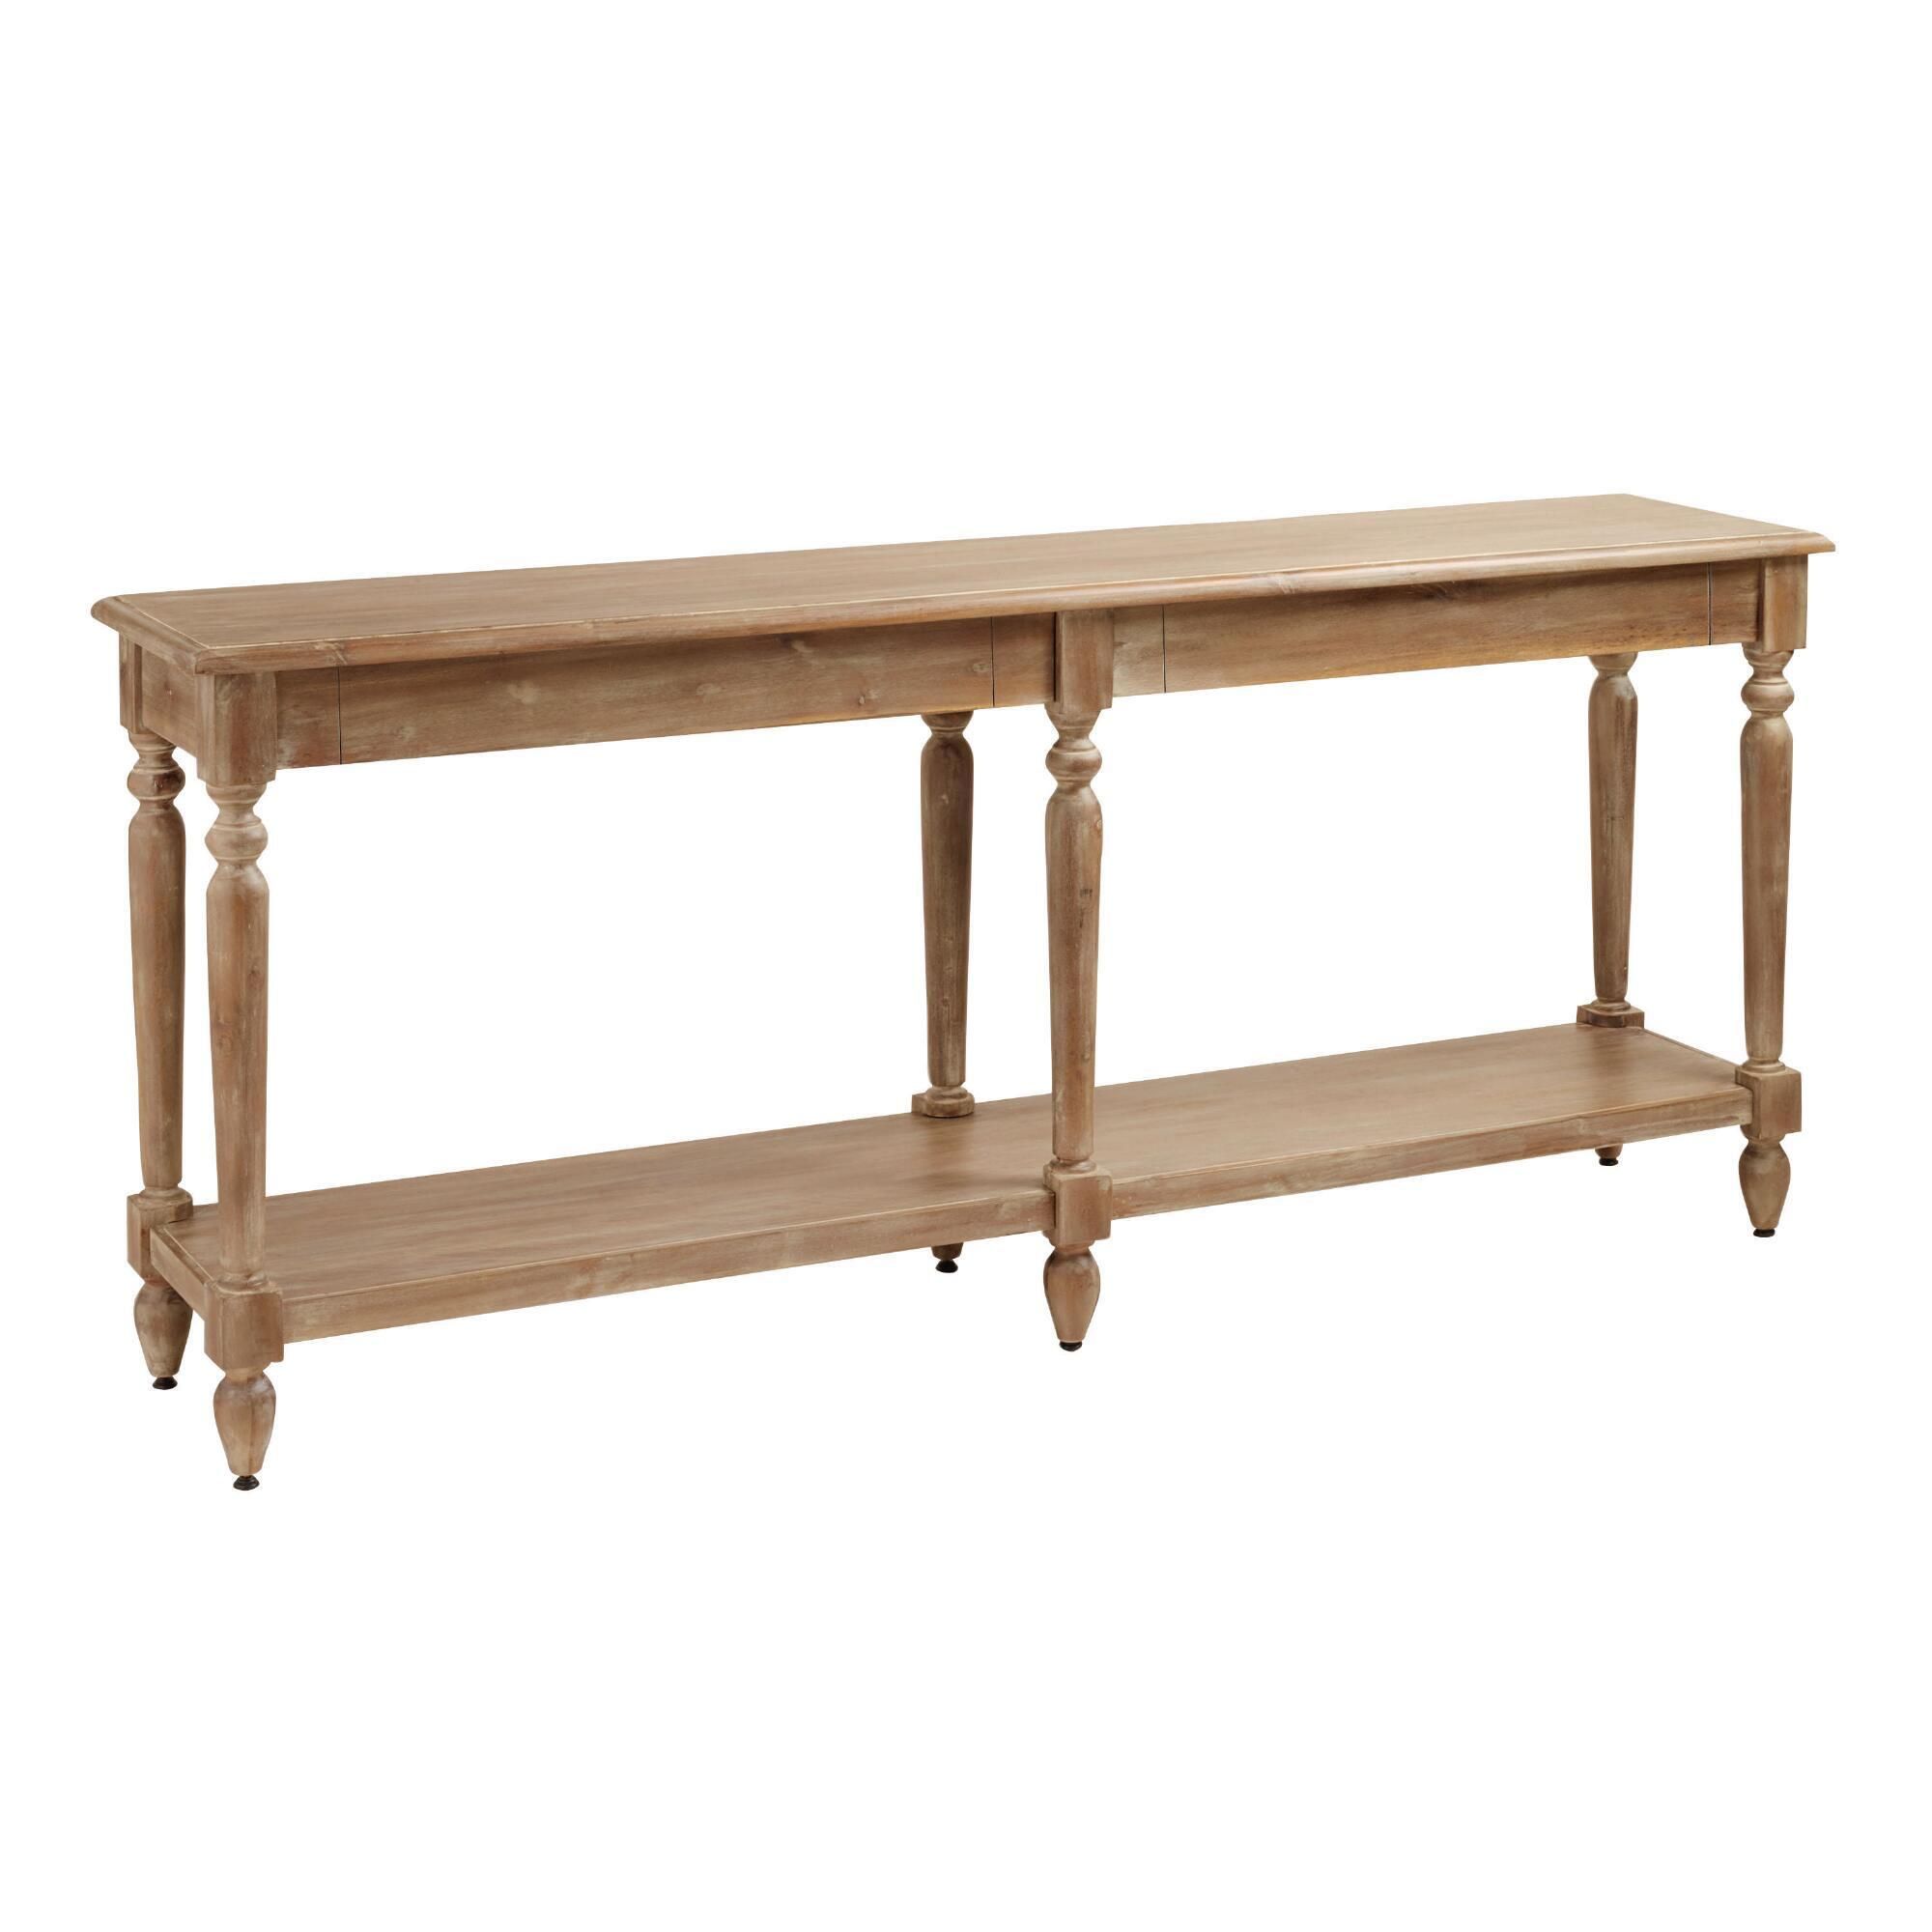 Wood Everett Foyer Table: White - Whitewash by World Market | World Market